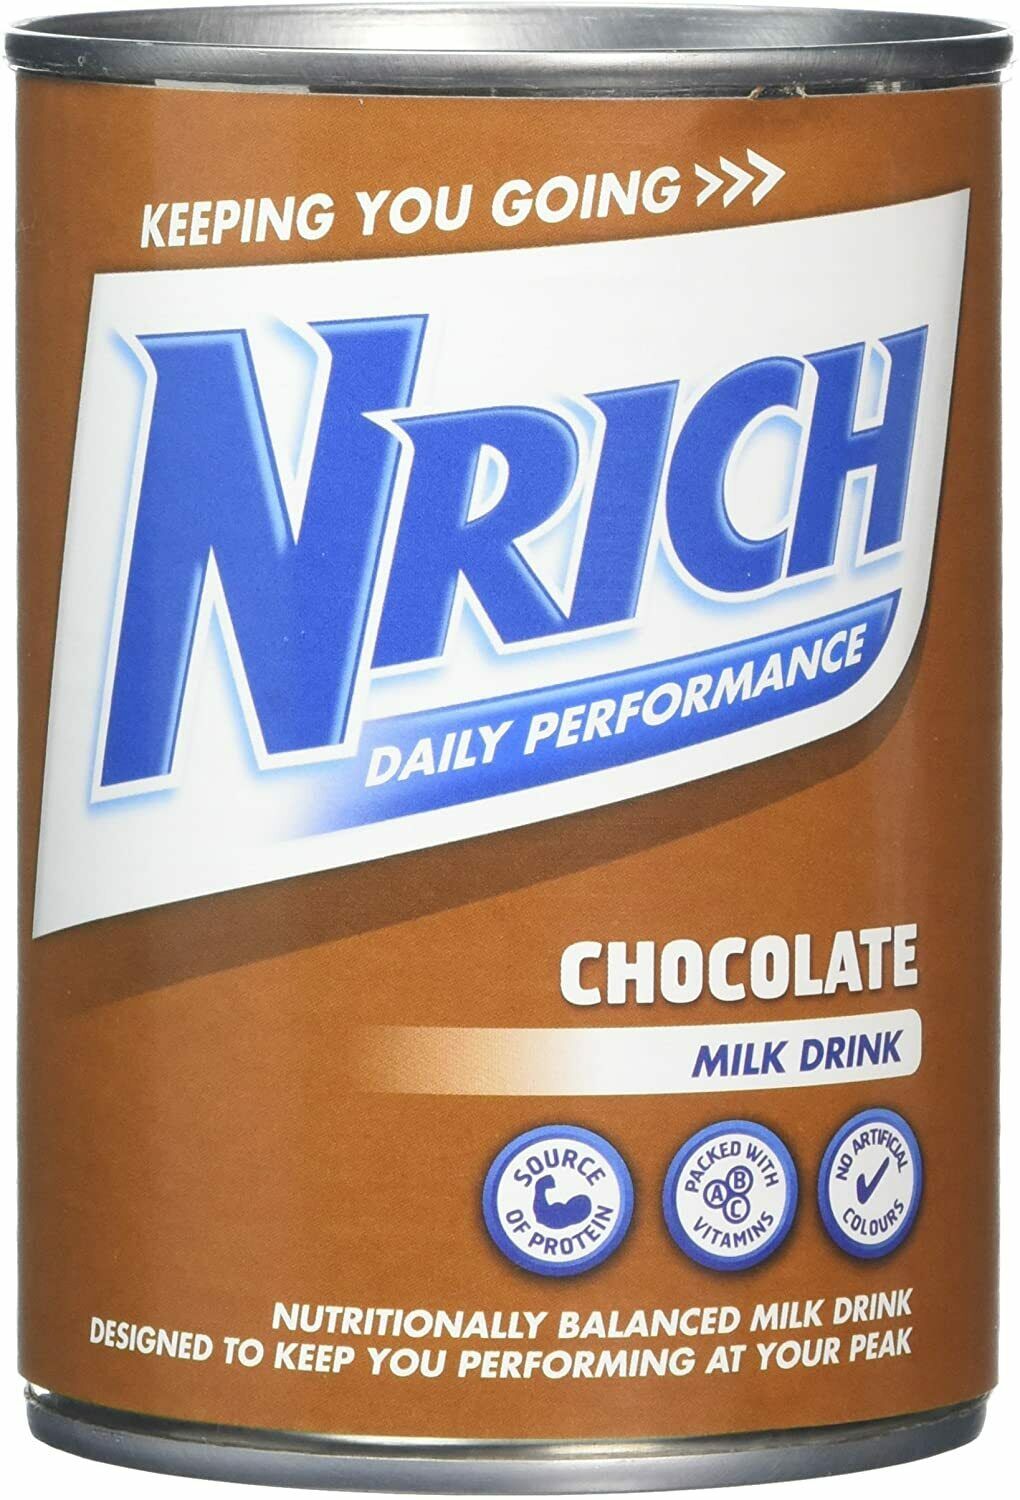 Nrich Chocolate 400g